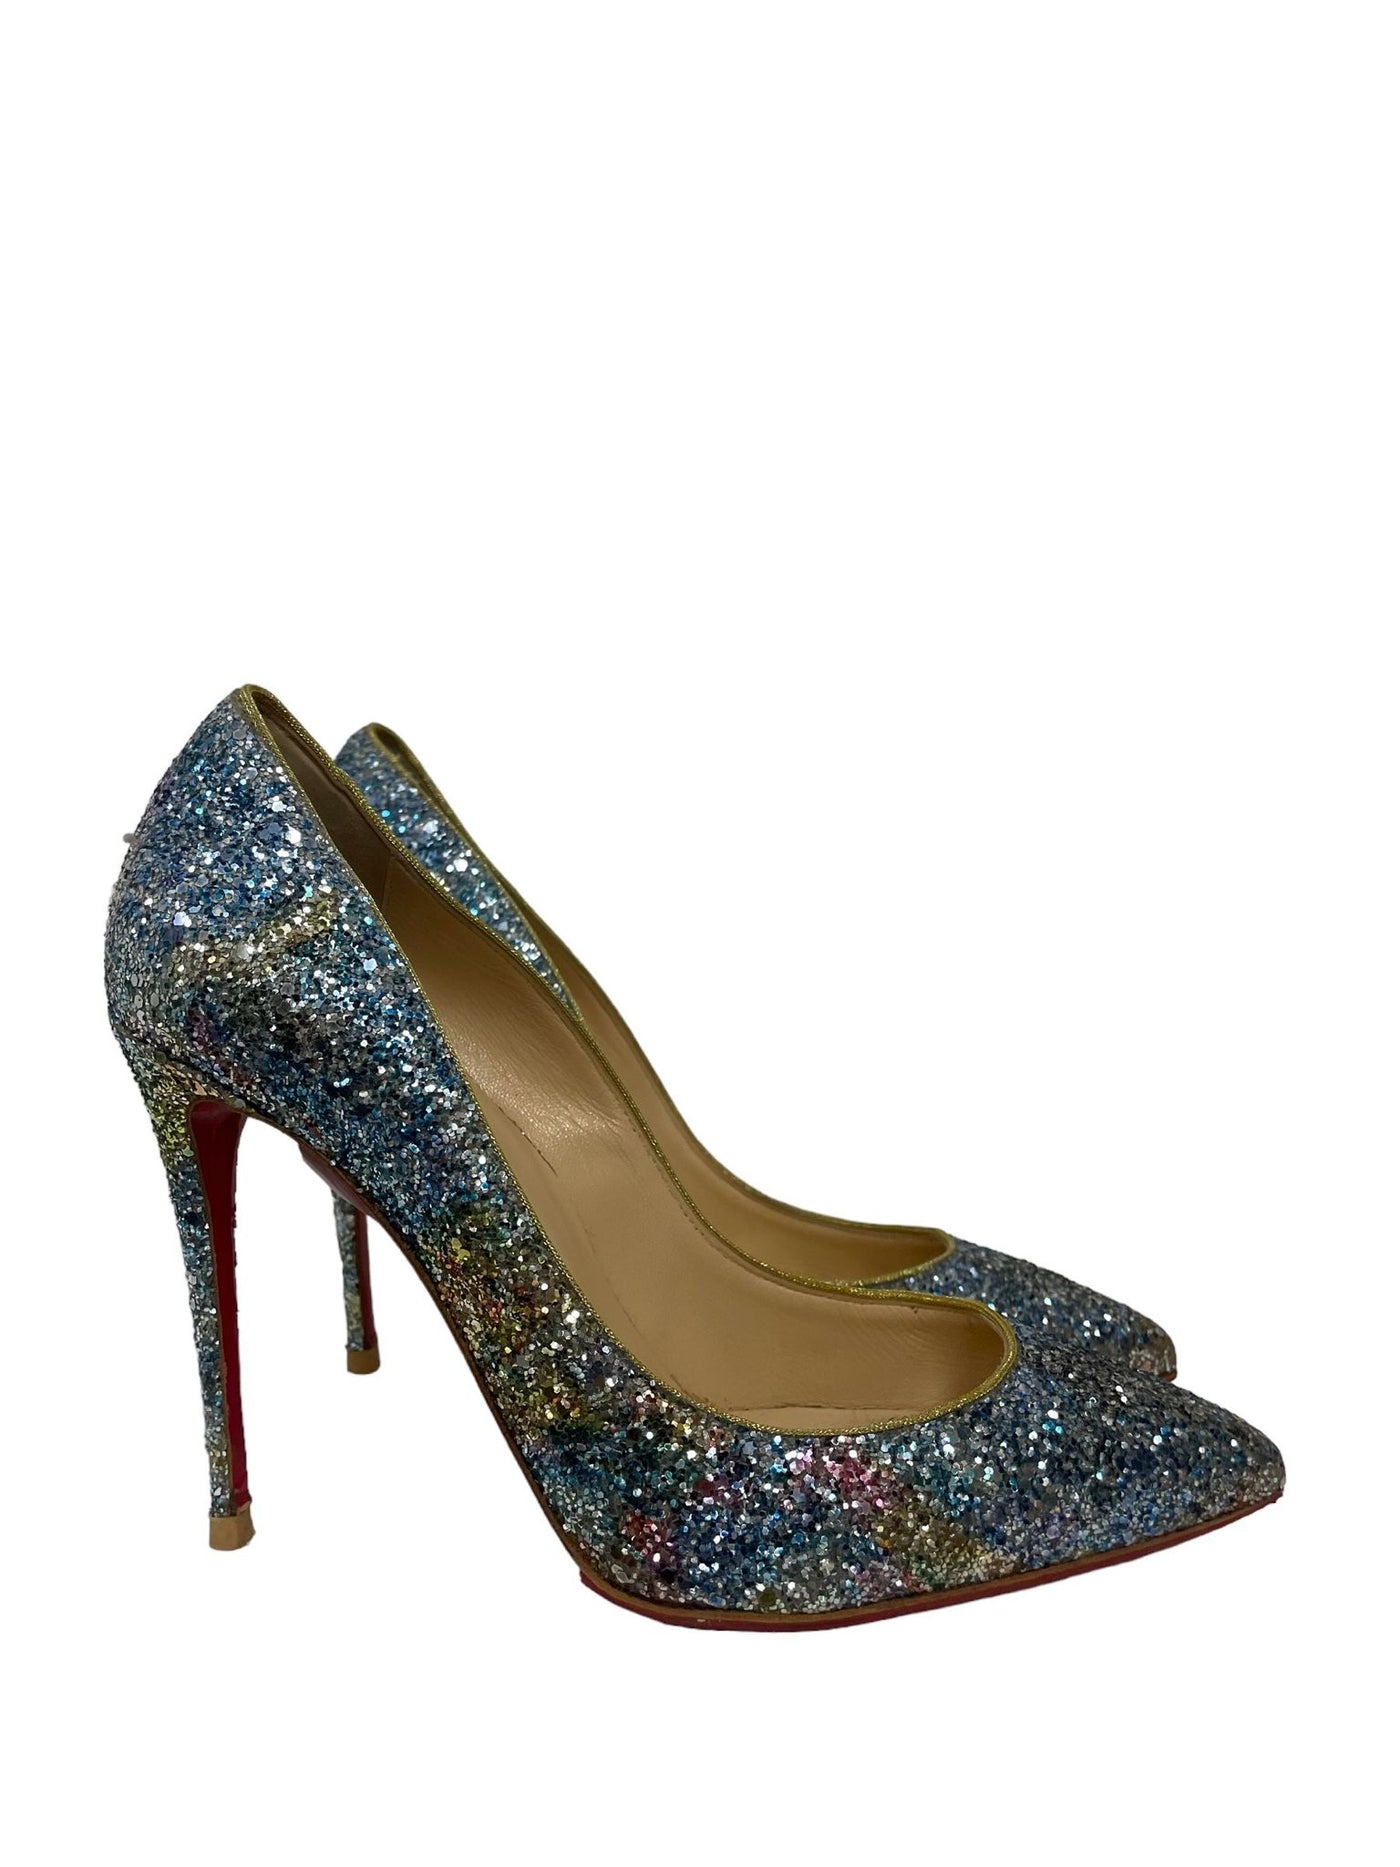 Glitter Christian Louboutin heels size 39